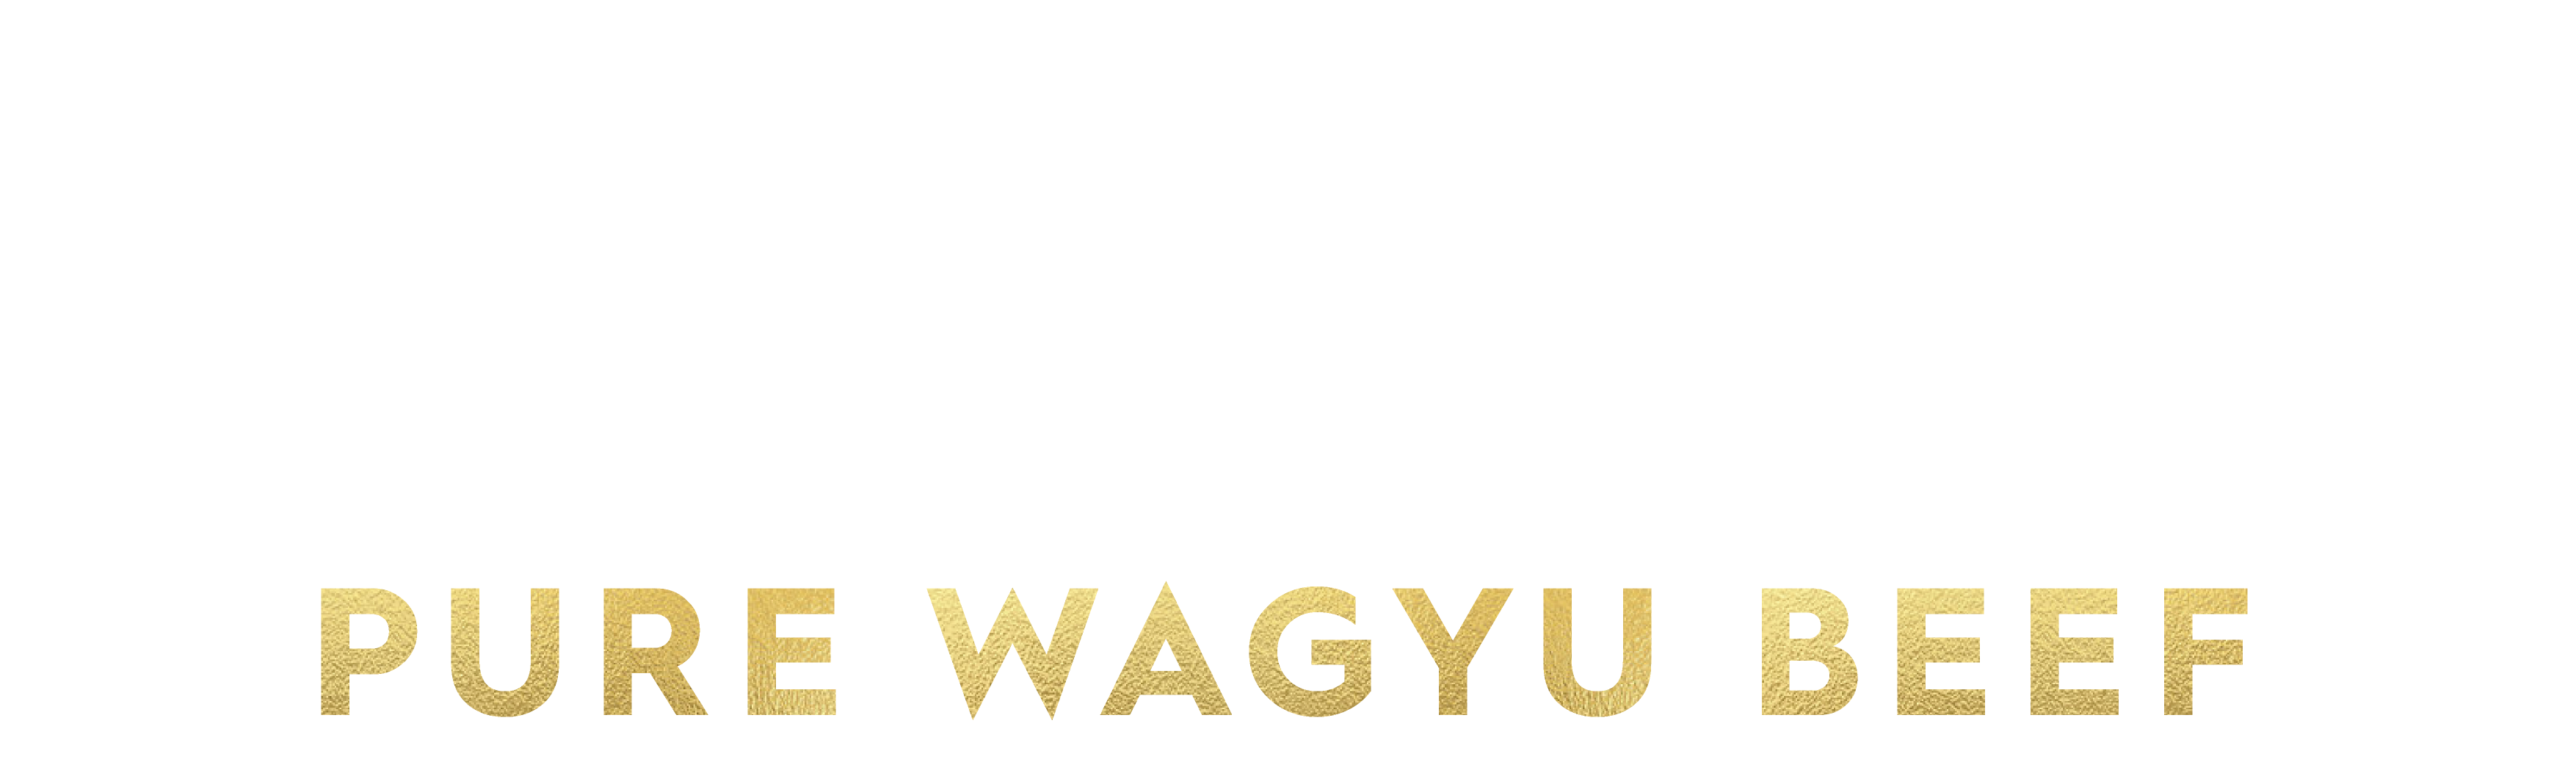 Diamantina Pure Wagyu Beef logo